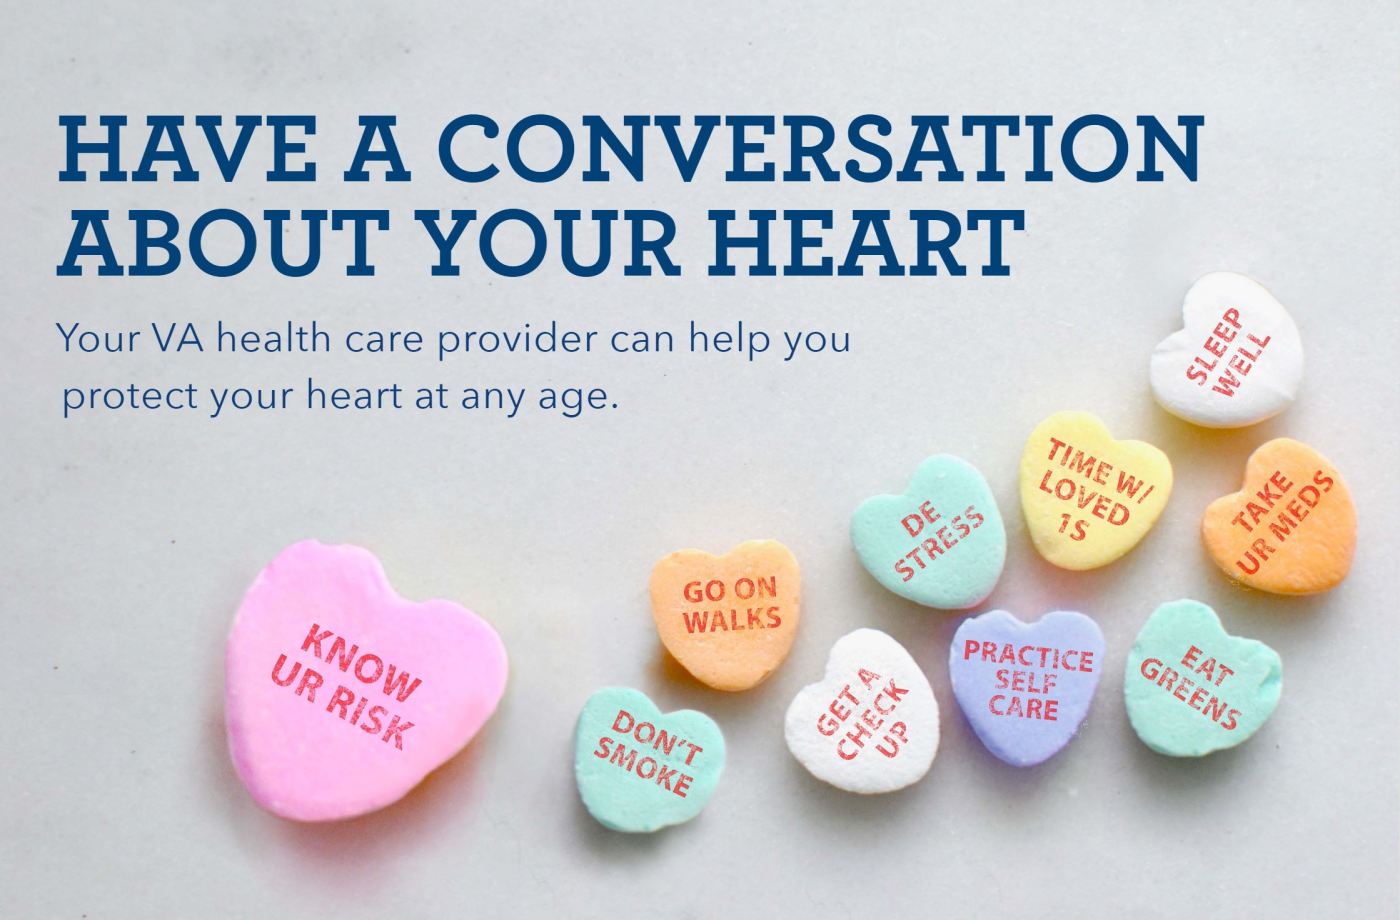 Have a conversation about your risk factors for heart disease